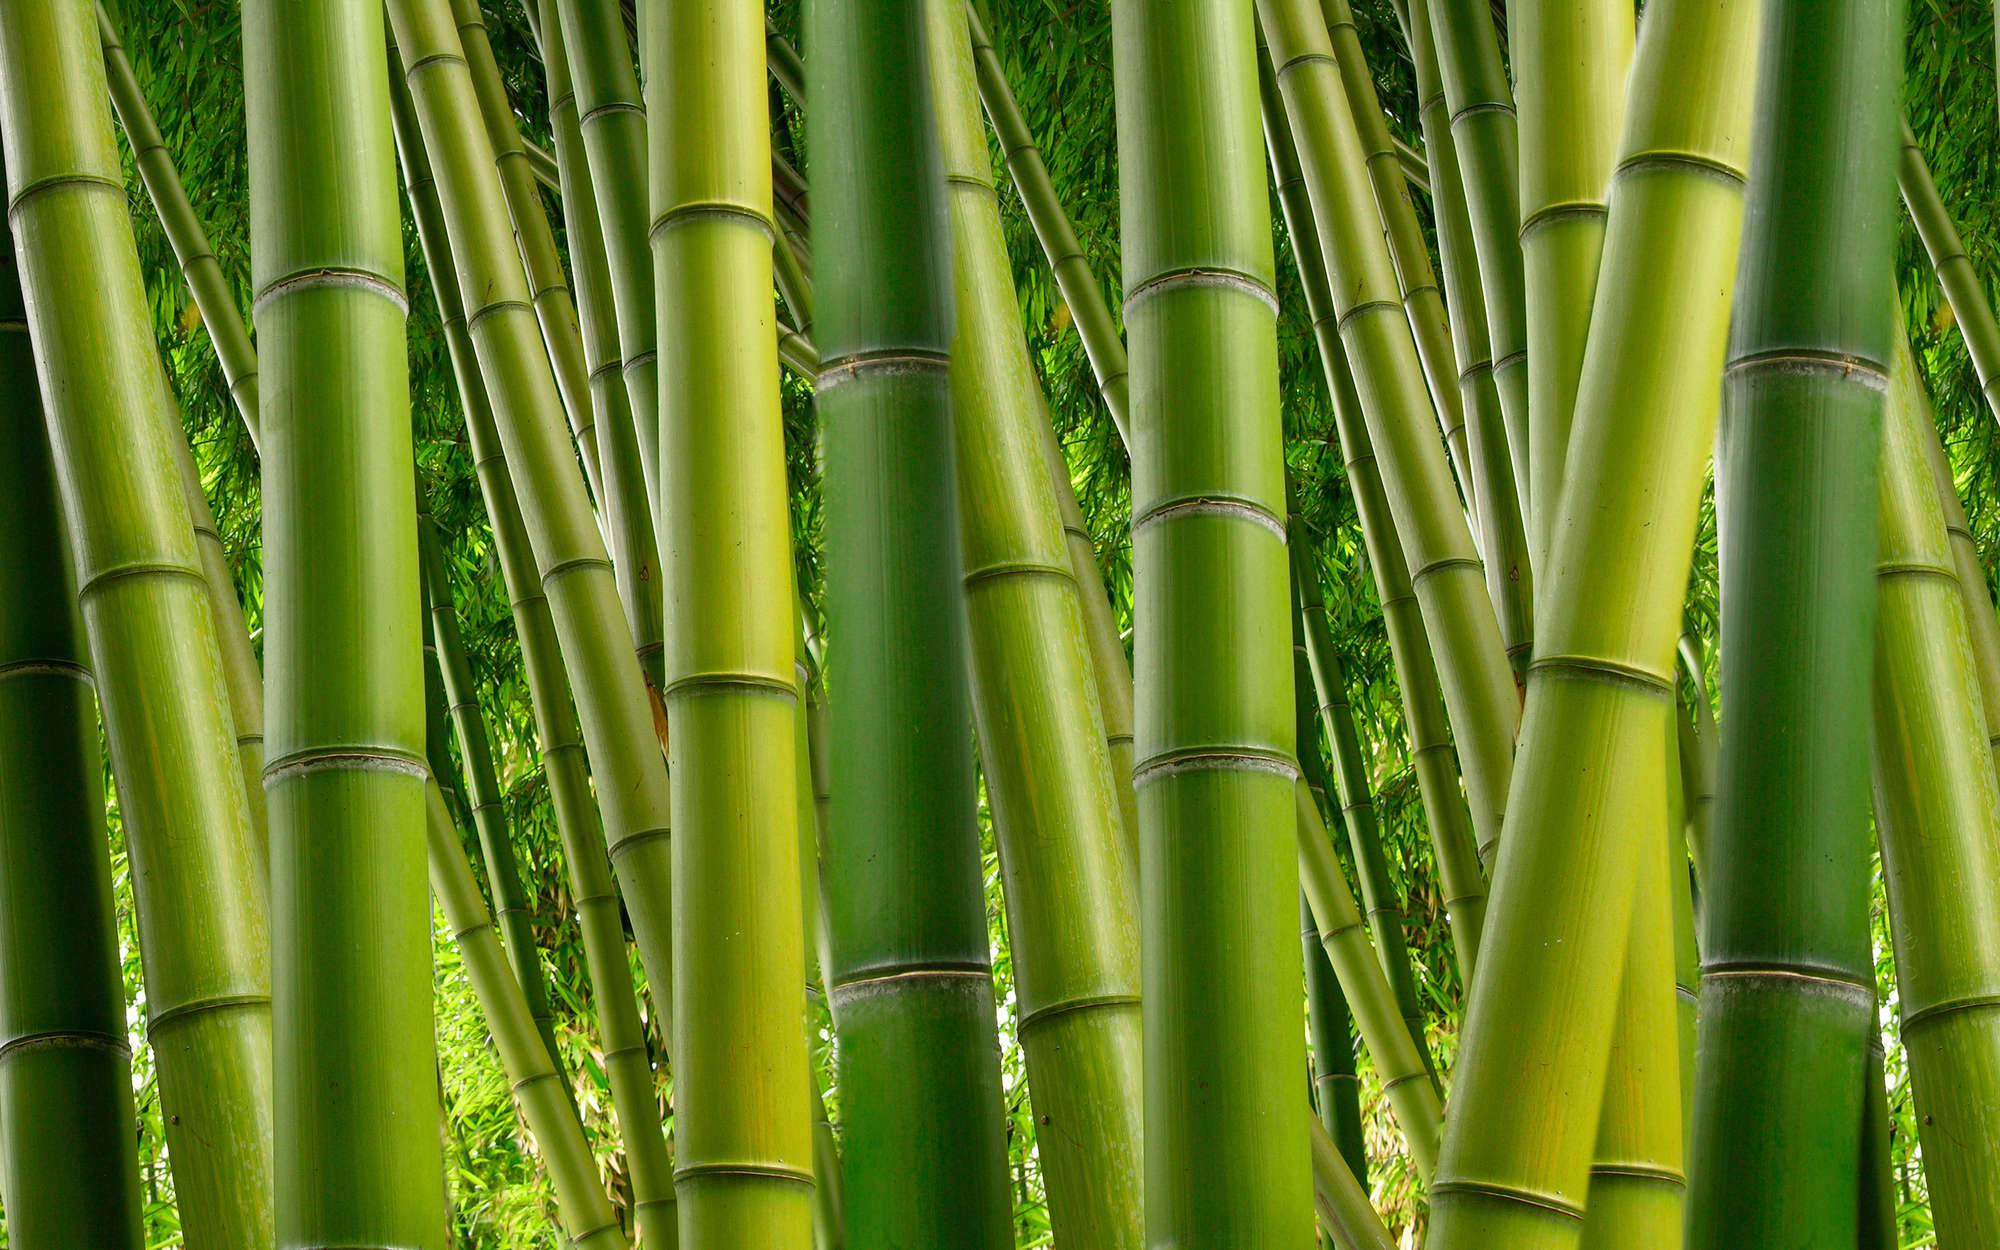             Natur Fototapete Bambus in Grün – Mattes Glattvlies
        